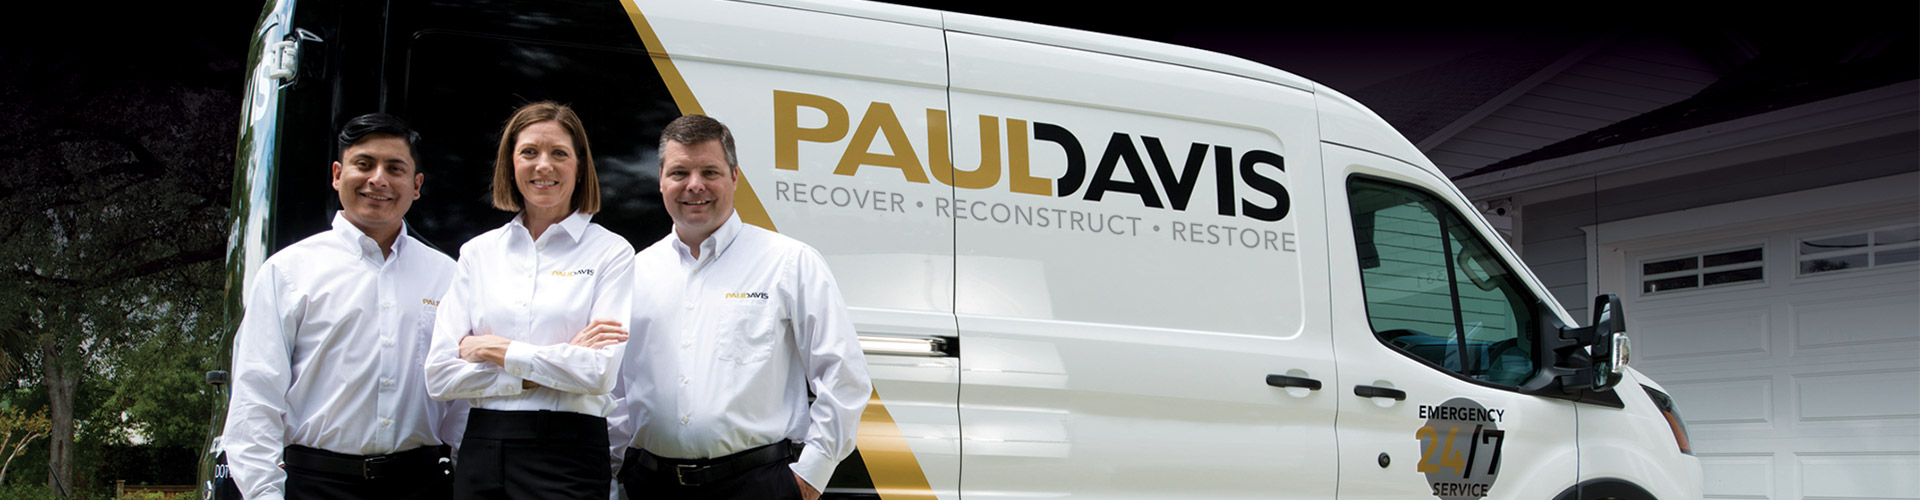 contact Paul Davis restoration